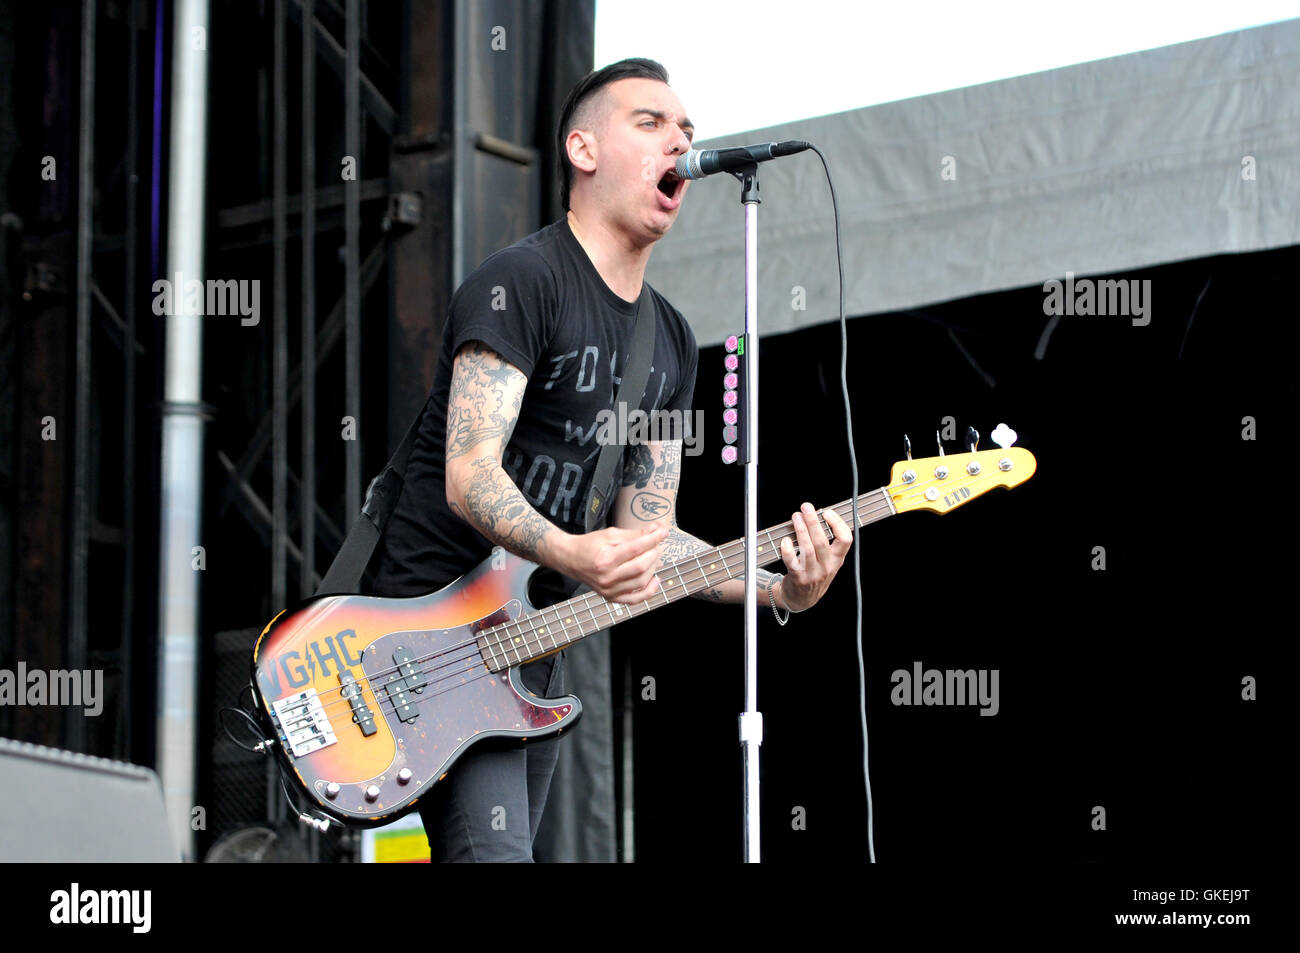 Rock auf der Reihe 2016 Musikfestival MAPFRE-Stadion in Columbus, Ohio, USA mit: Anti-Flag wo: Columbus, Ohio, Vereinigte Staaten, wann: 22. Mai 2016 Stockfoto